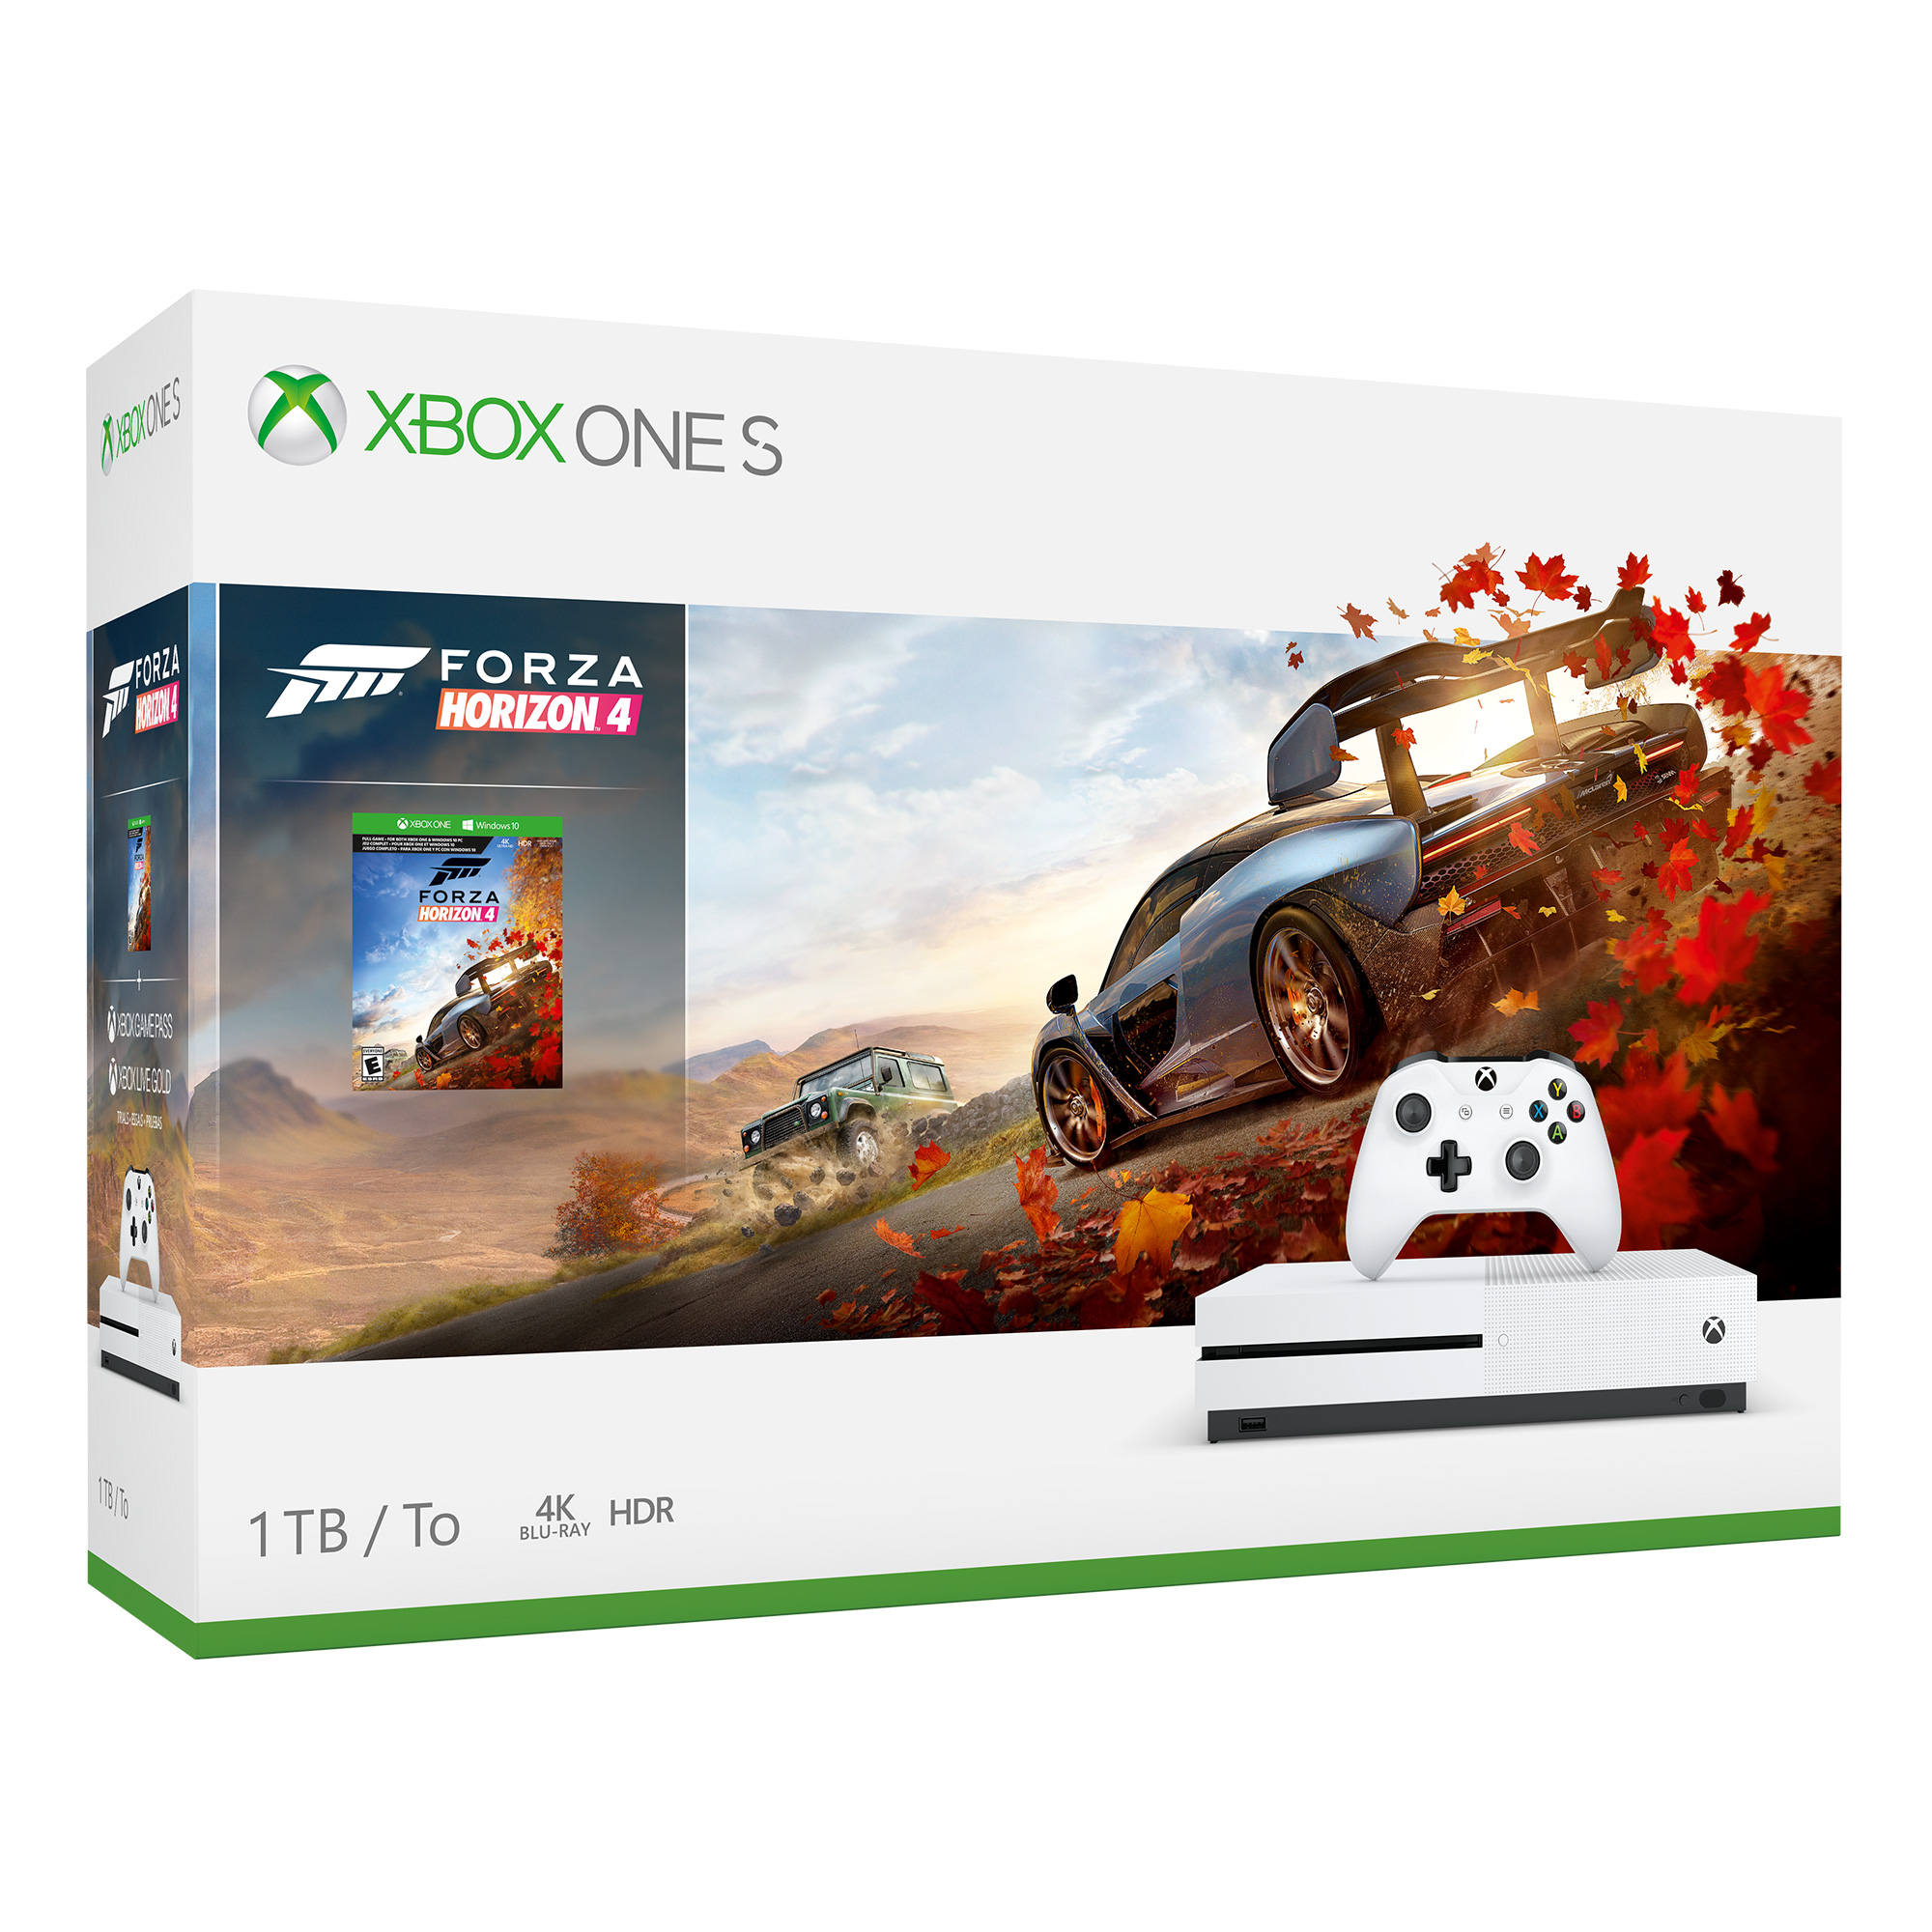 Microsoft Xbox One S 1TB Forza Horizon 4 Bundle, White, 234-00552 - image 1 of 14